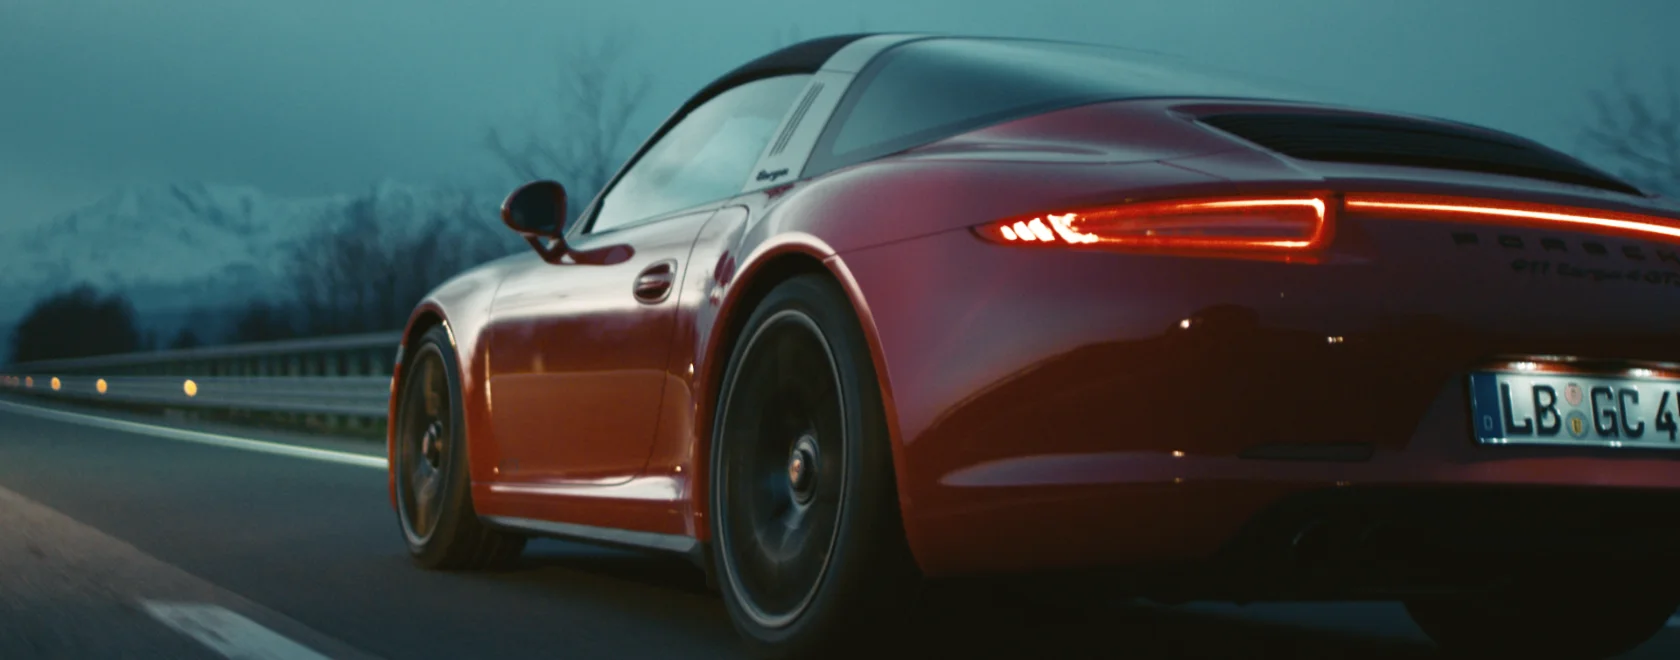 Porsche Mission X - Reveal Film on Vimeo